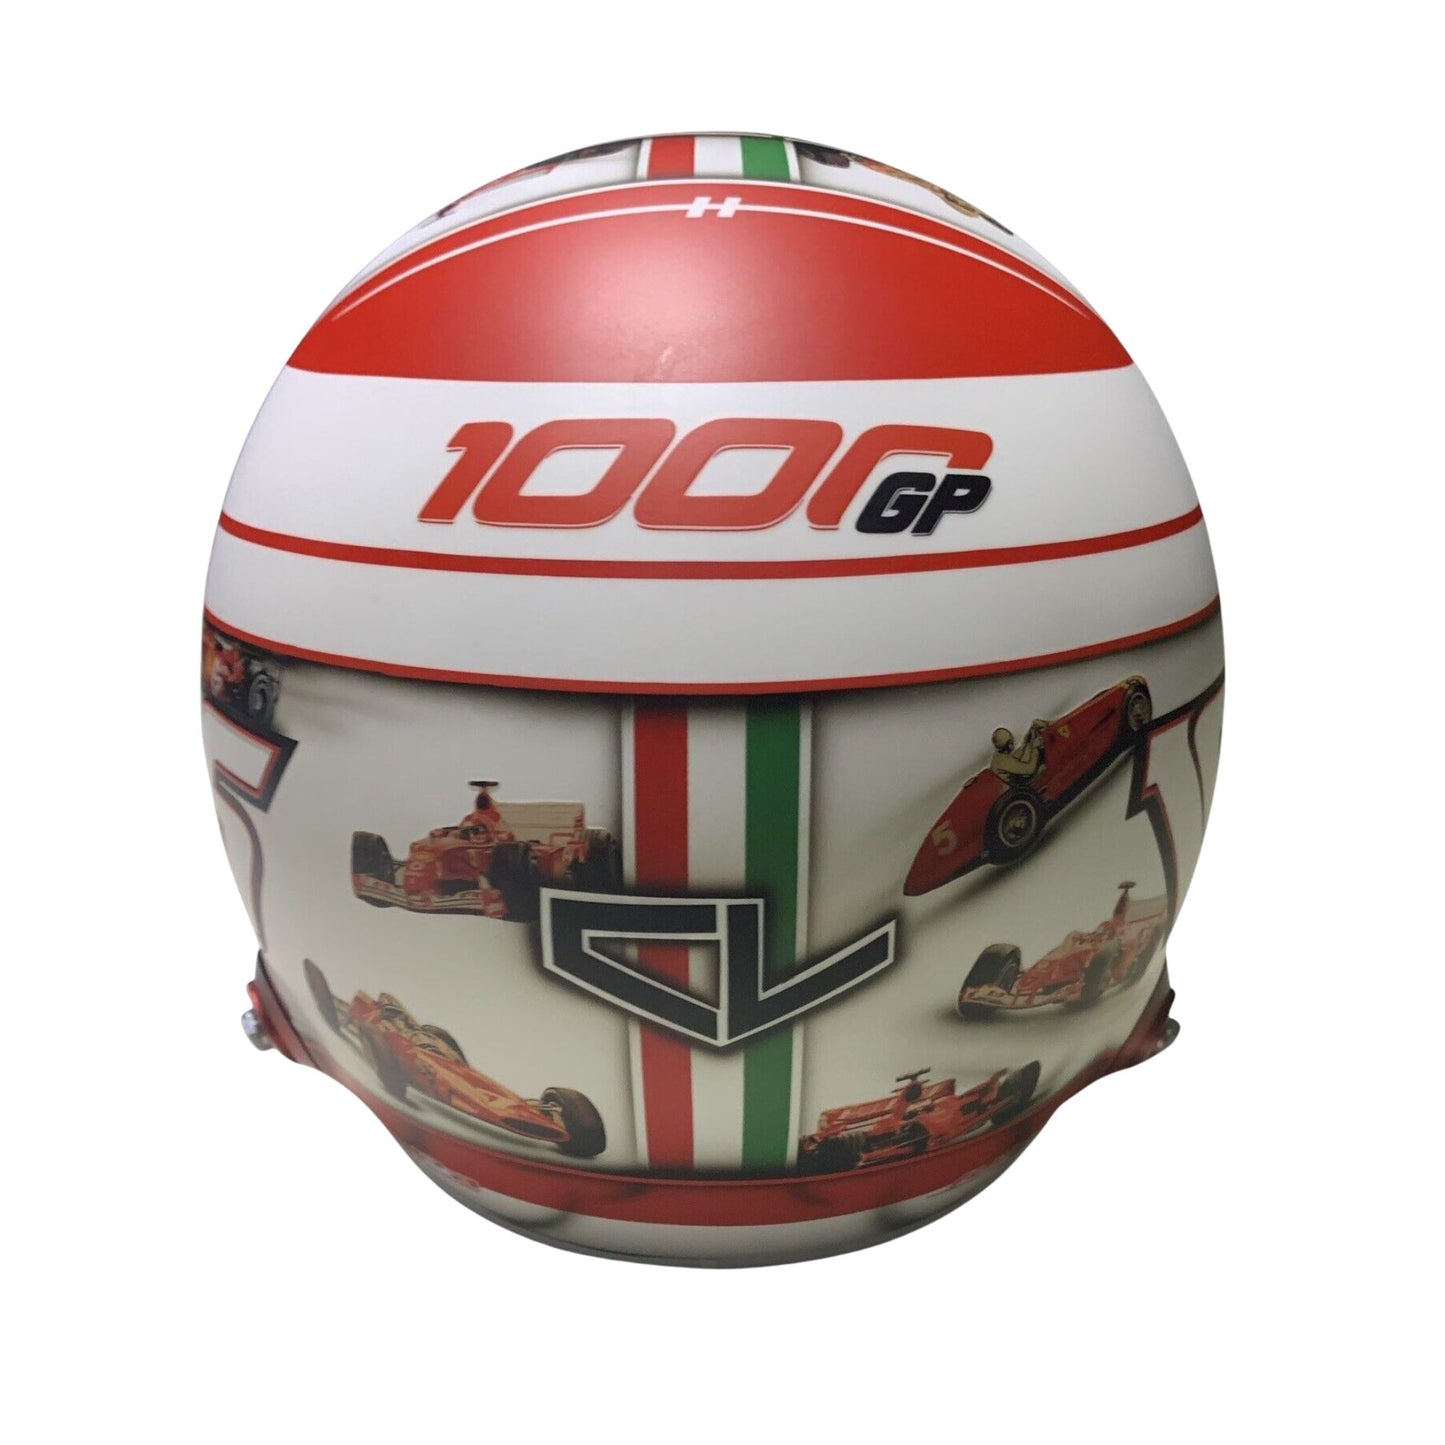 Charles Leclerc Signed Helmet - F1 Memorabilia - Back side view